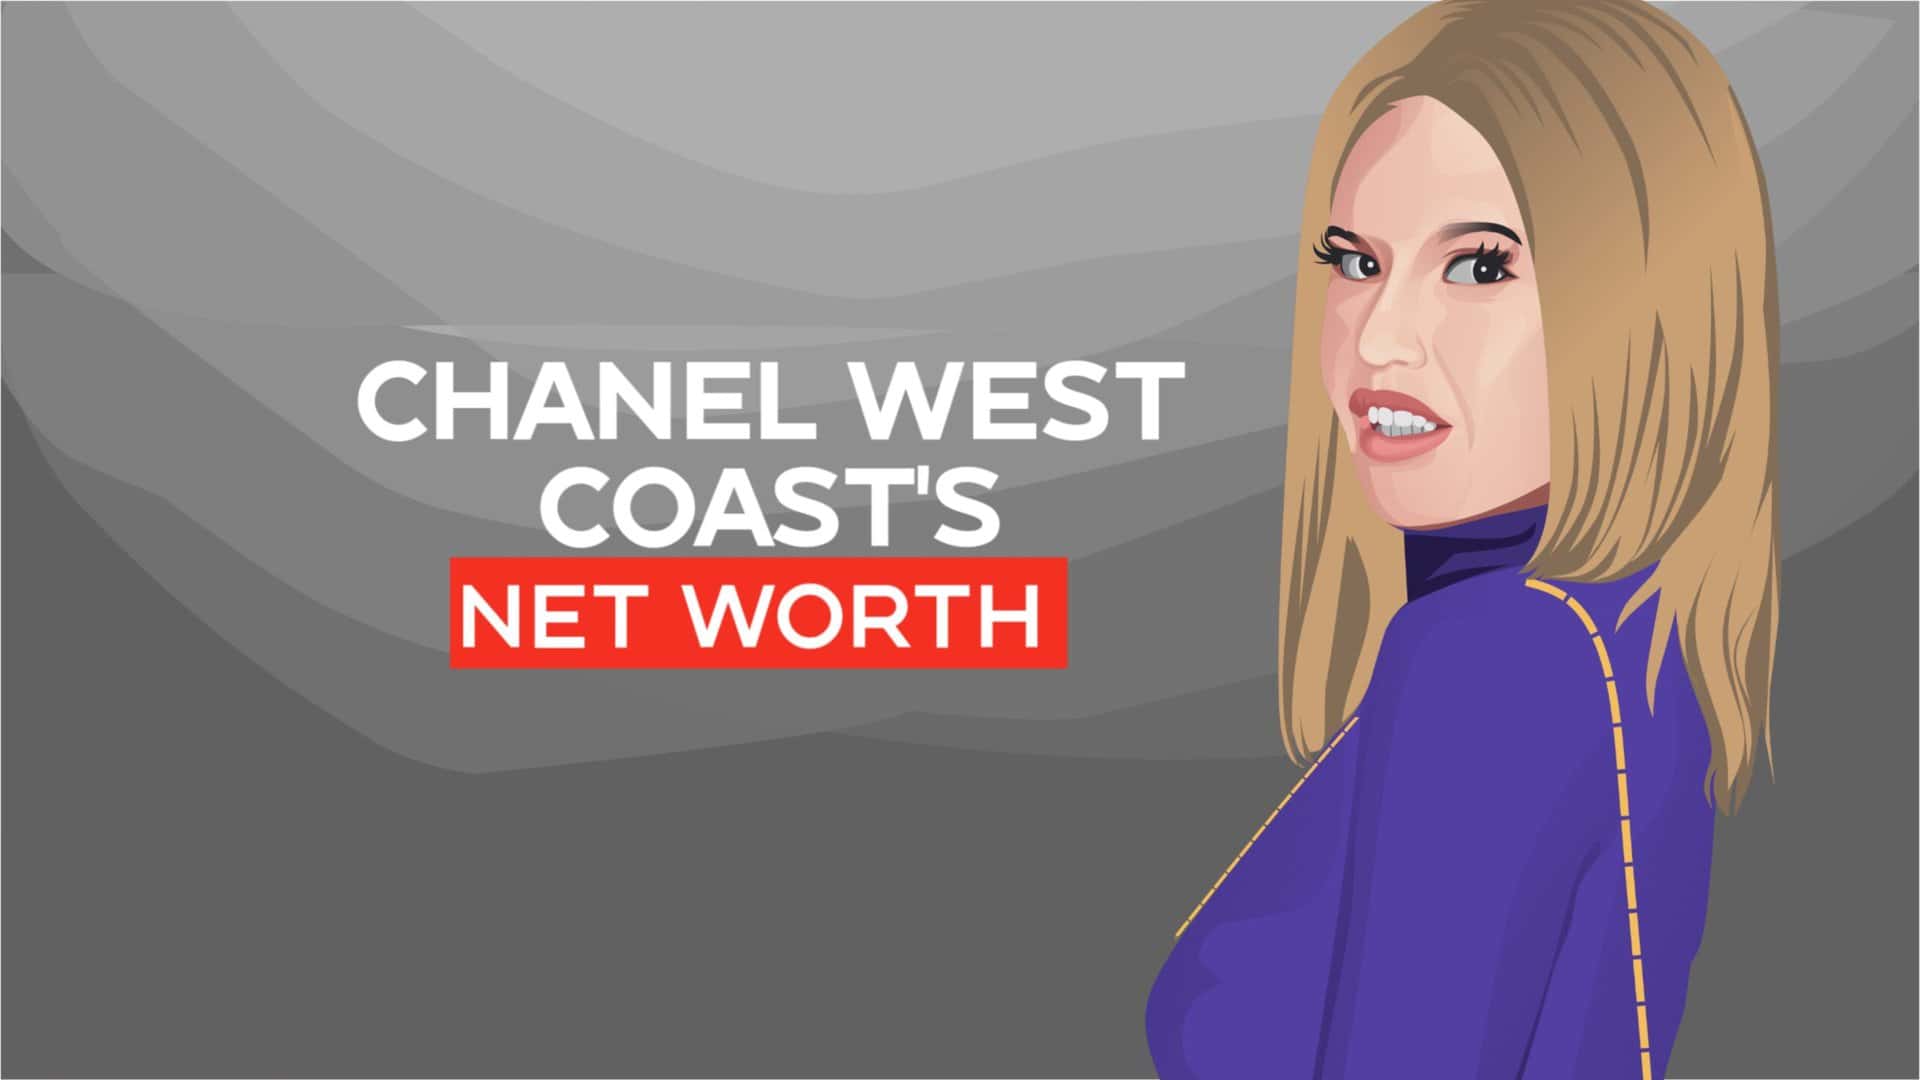 Chanel West Coast's net worth